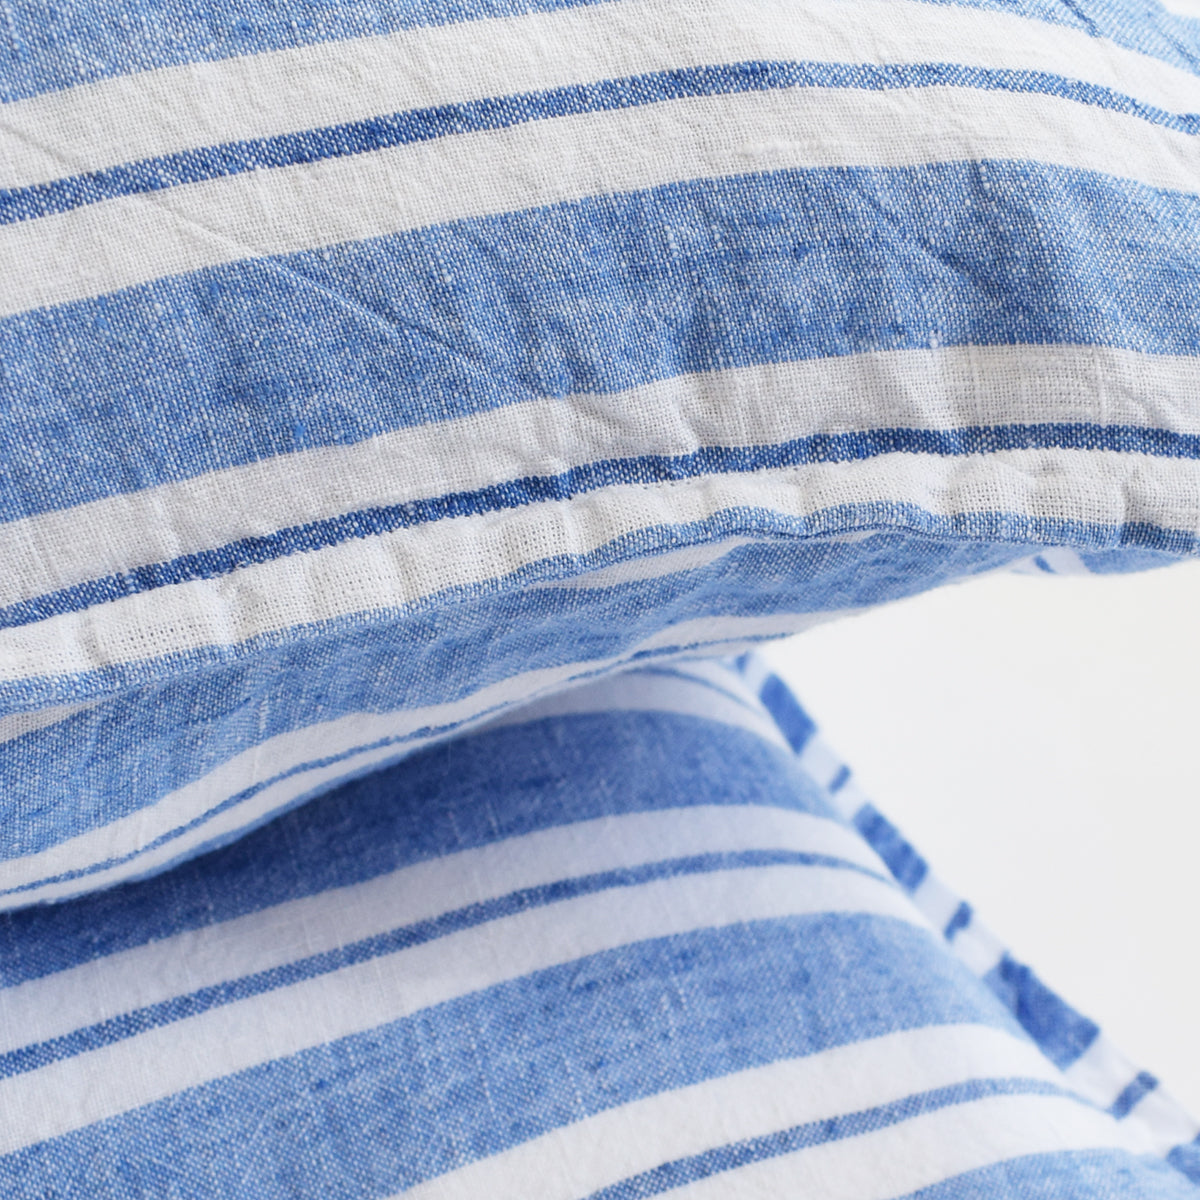 Linen Euro Pillowcase, large blue stripes